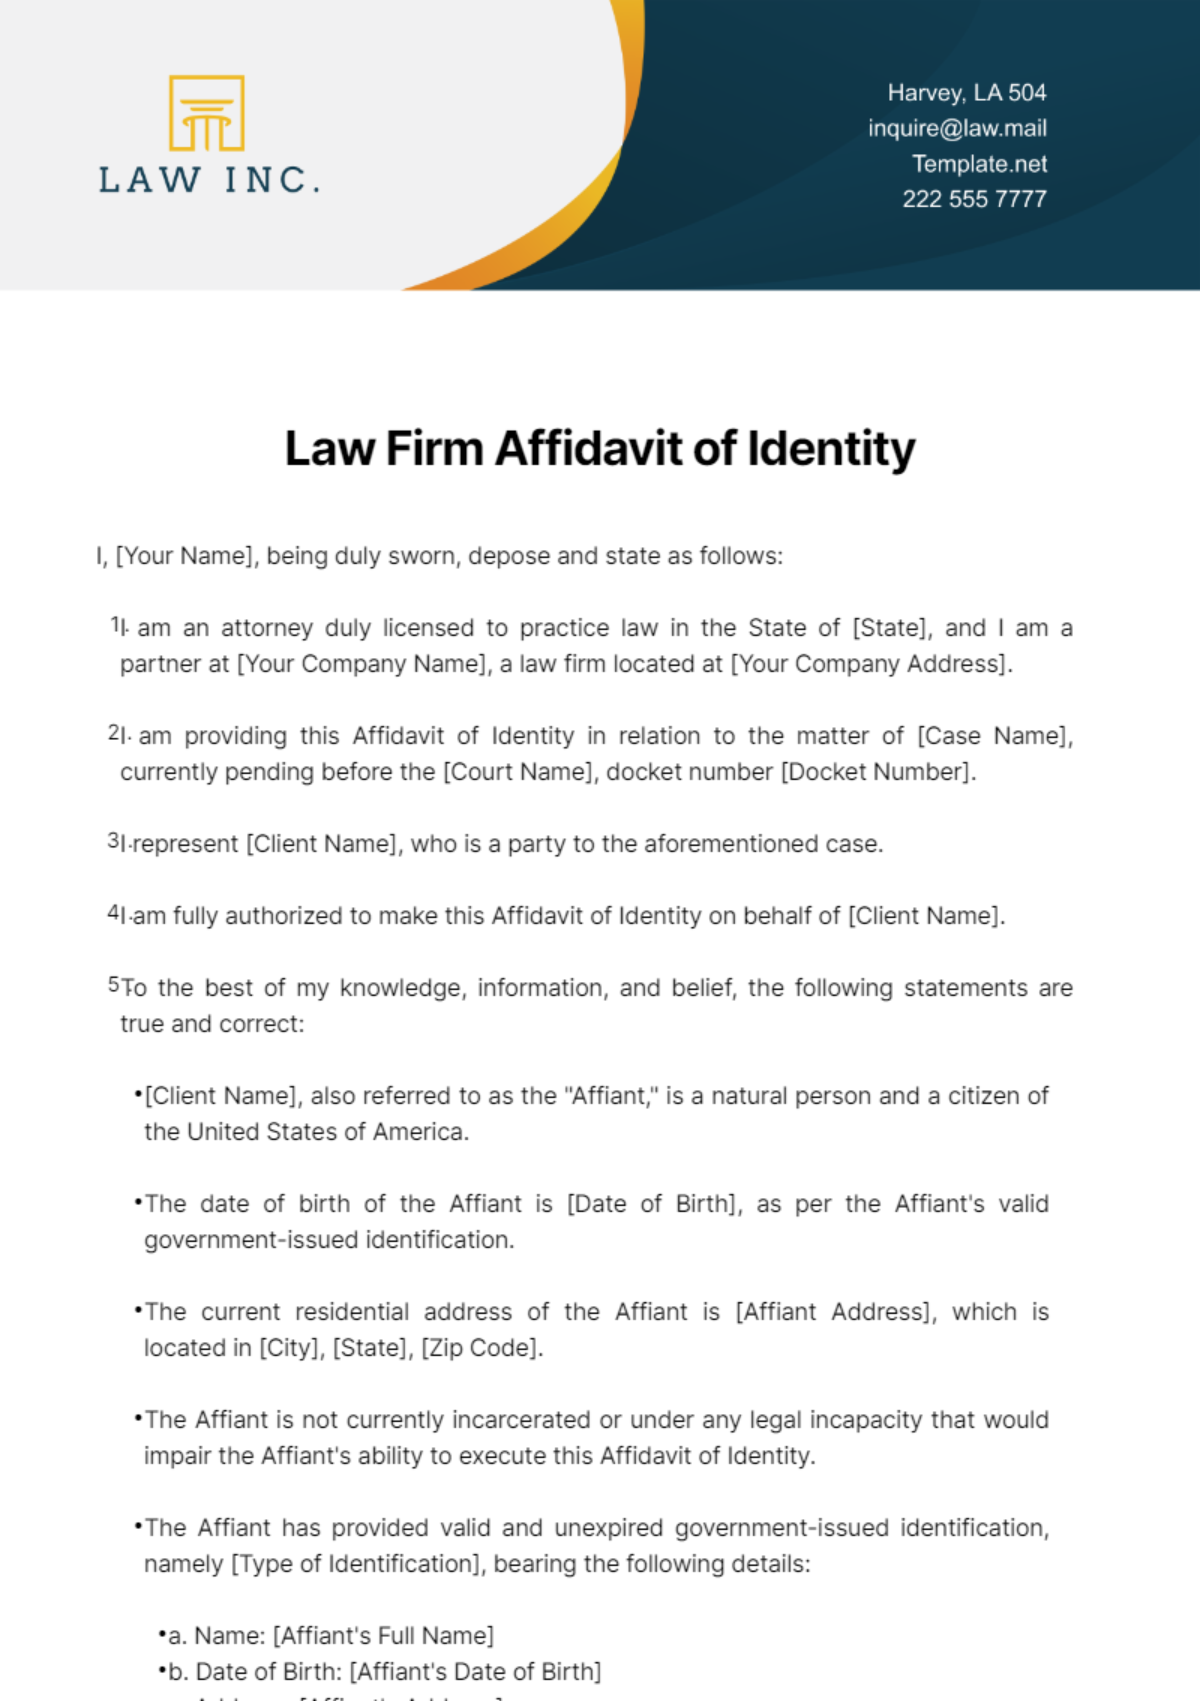 Law Firm Affidavit of Identity Template